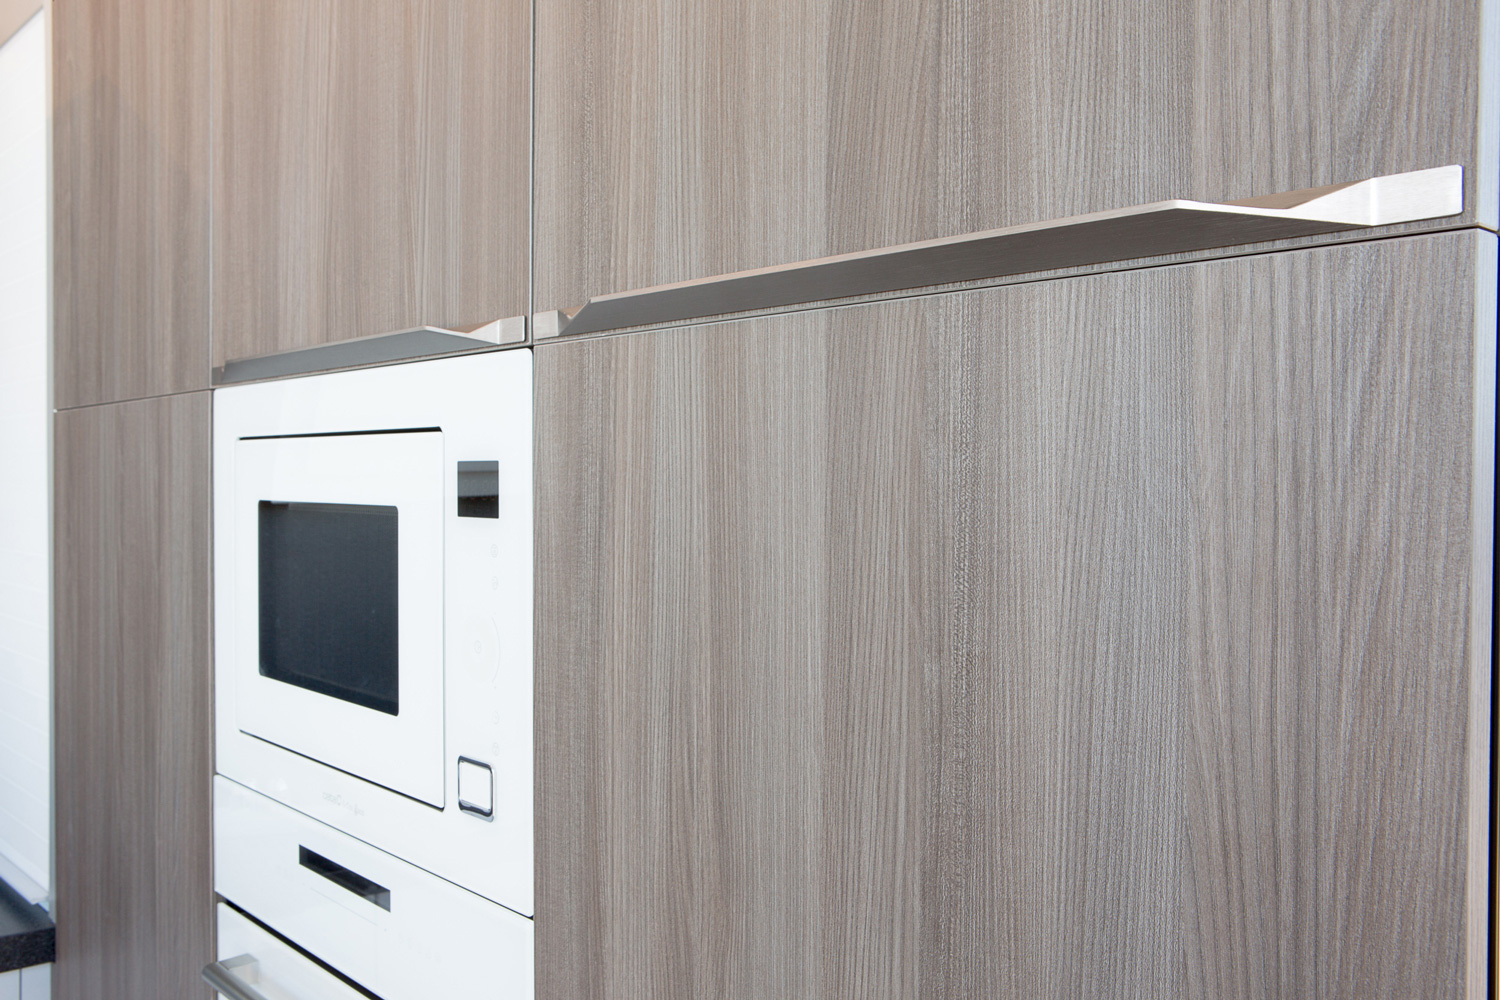 Tamm aluminum kitchen handle by Viefe. Tirador de cocina de aluminio.